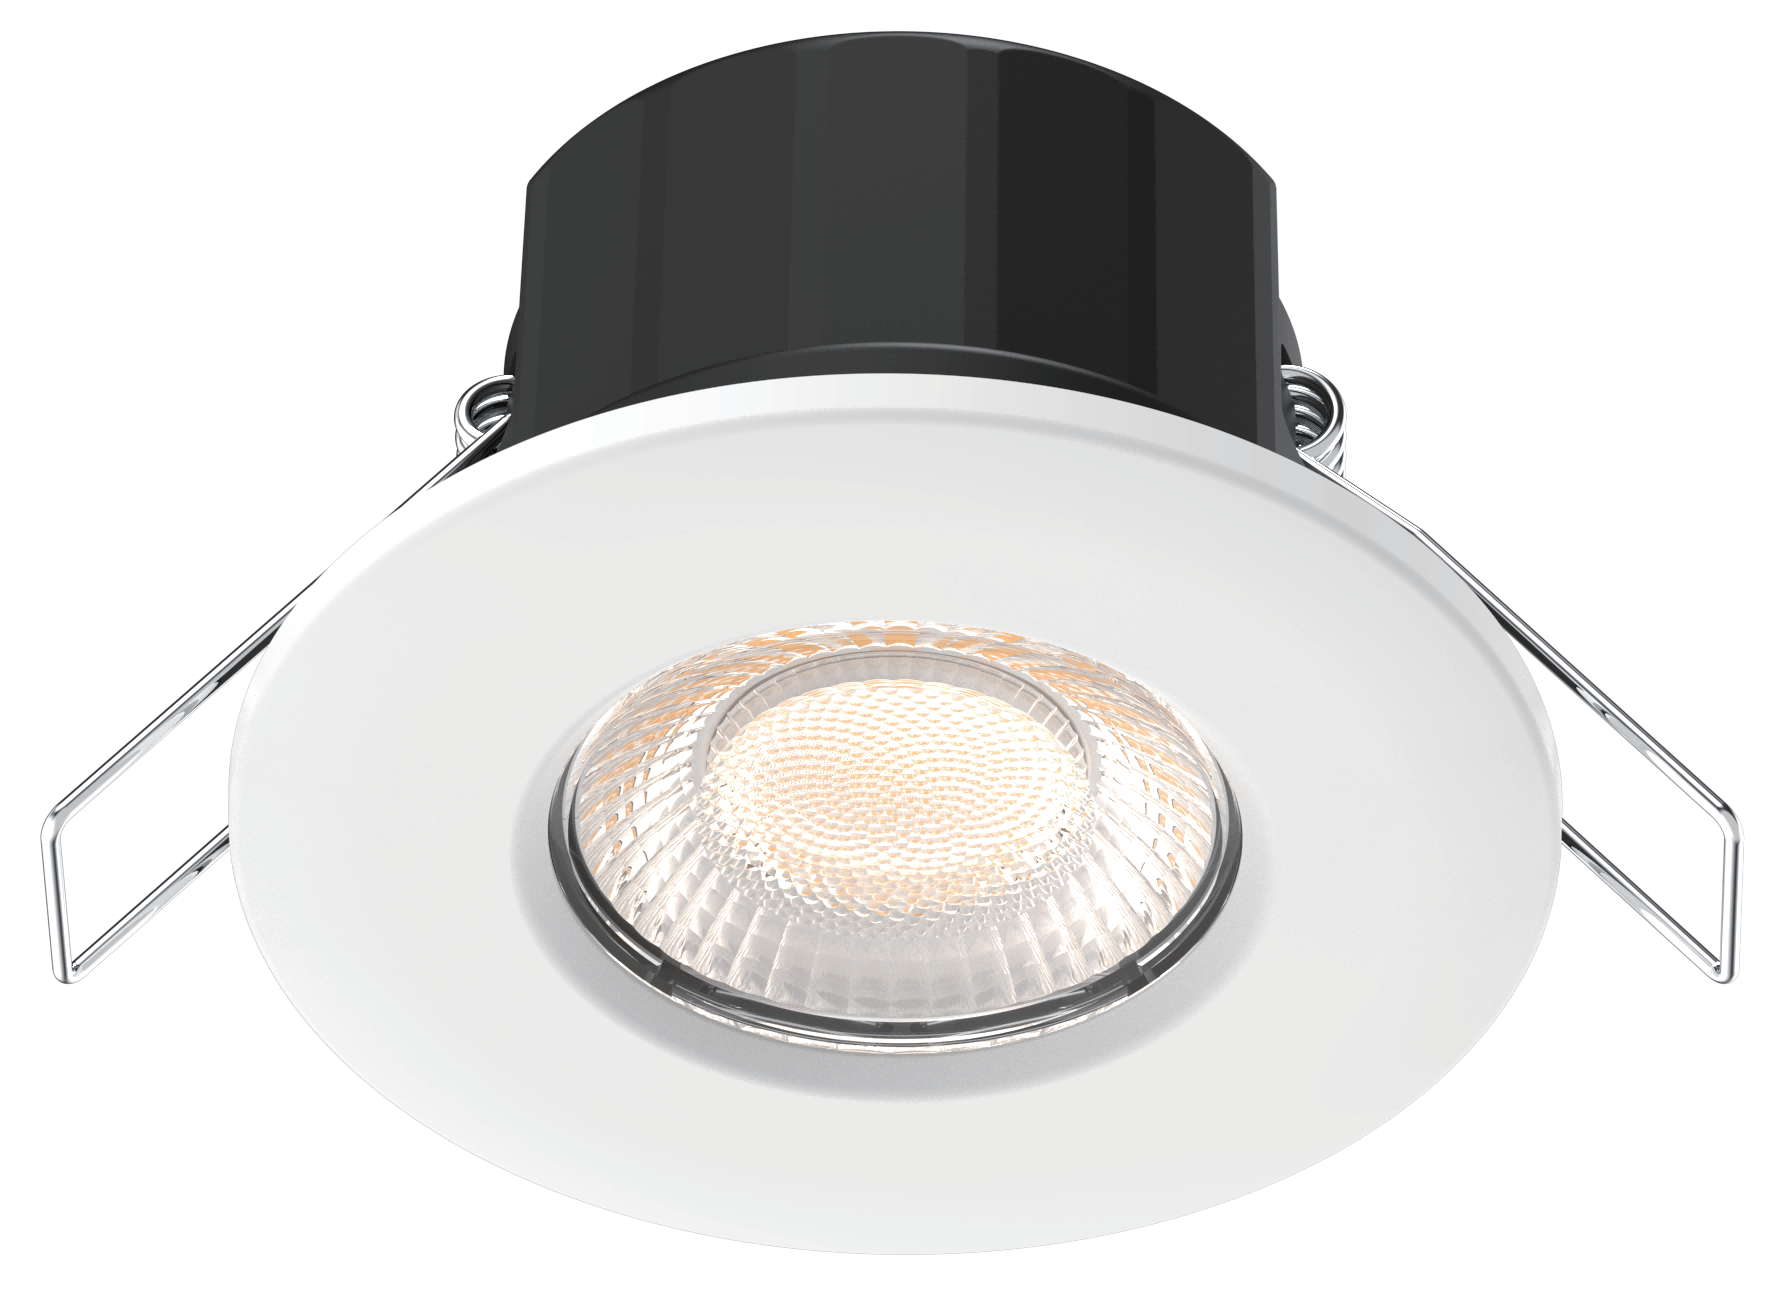 Nio Power & Beam Angle Adjustable LED Downlight 5RS348